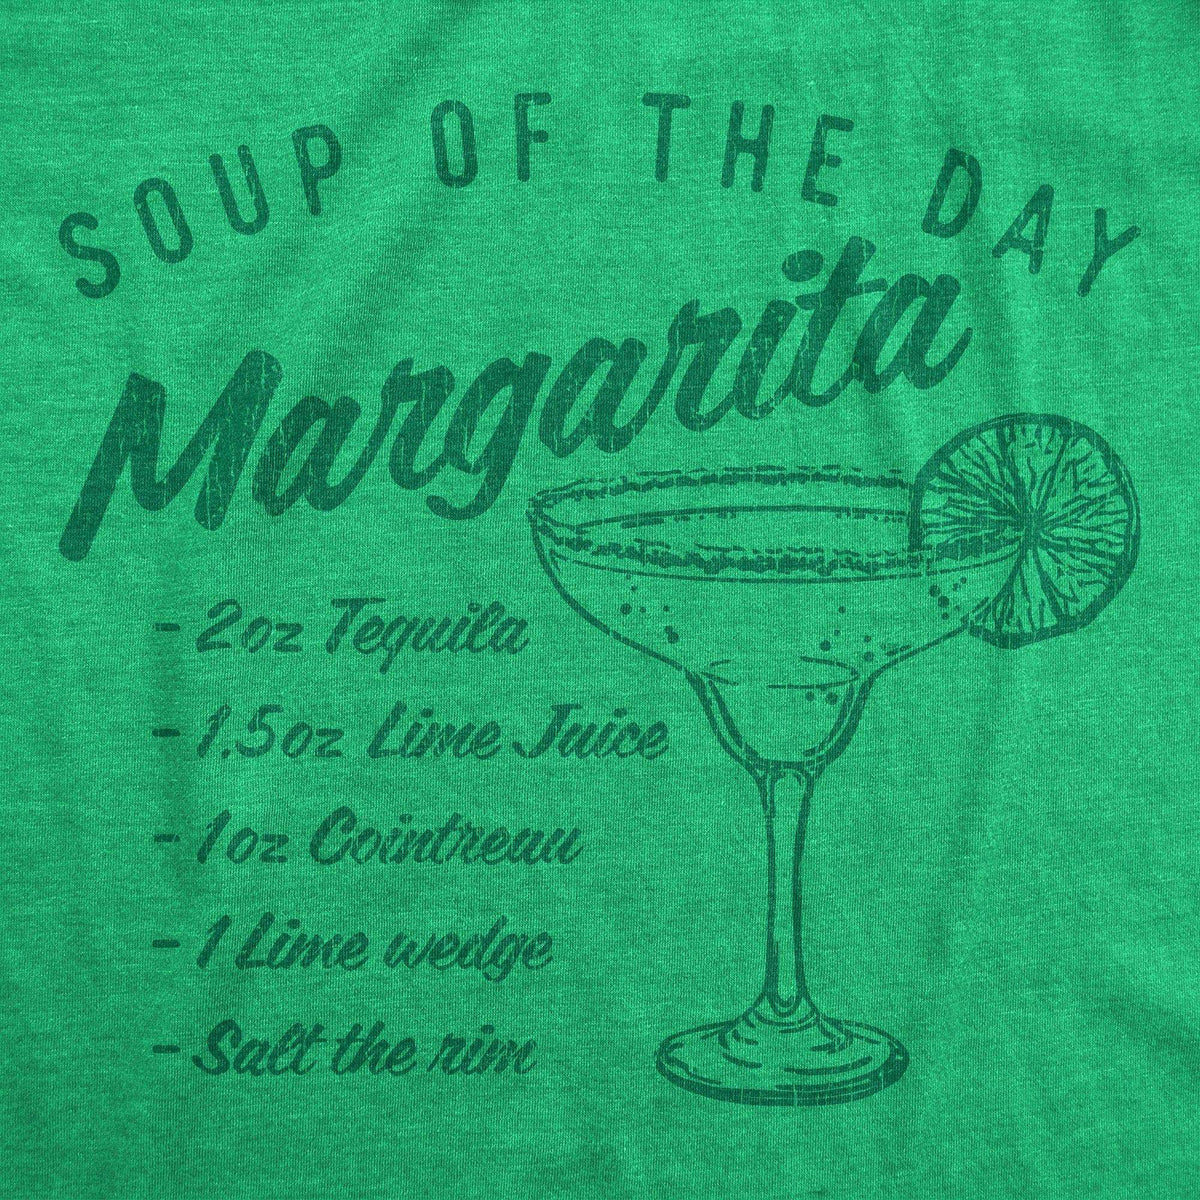 Soup Of The Day: Margarita Men&#39;s Tshirt - Crazy Dog T-Shirts